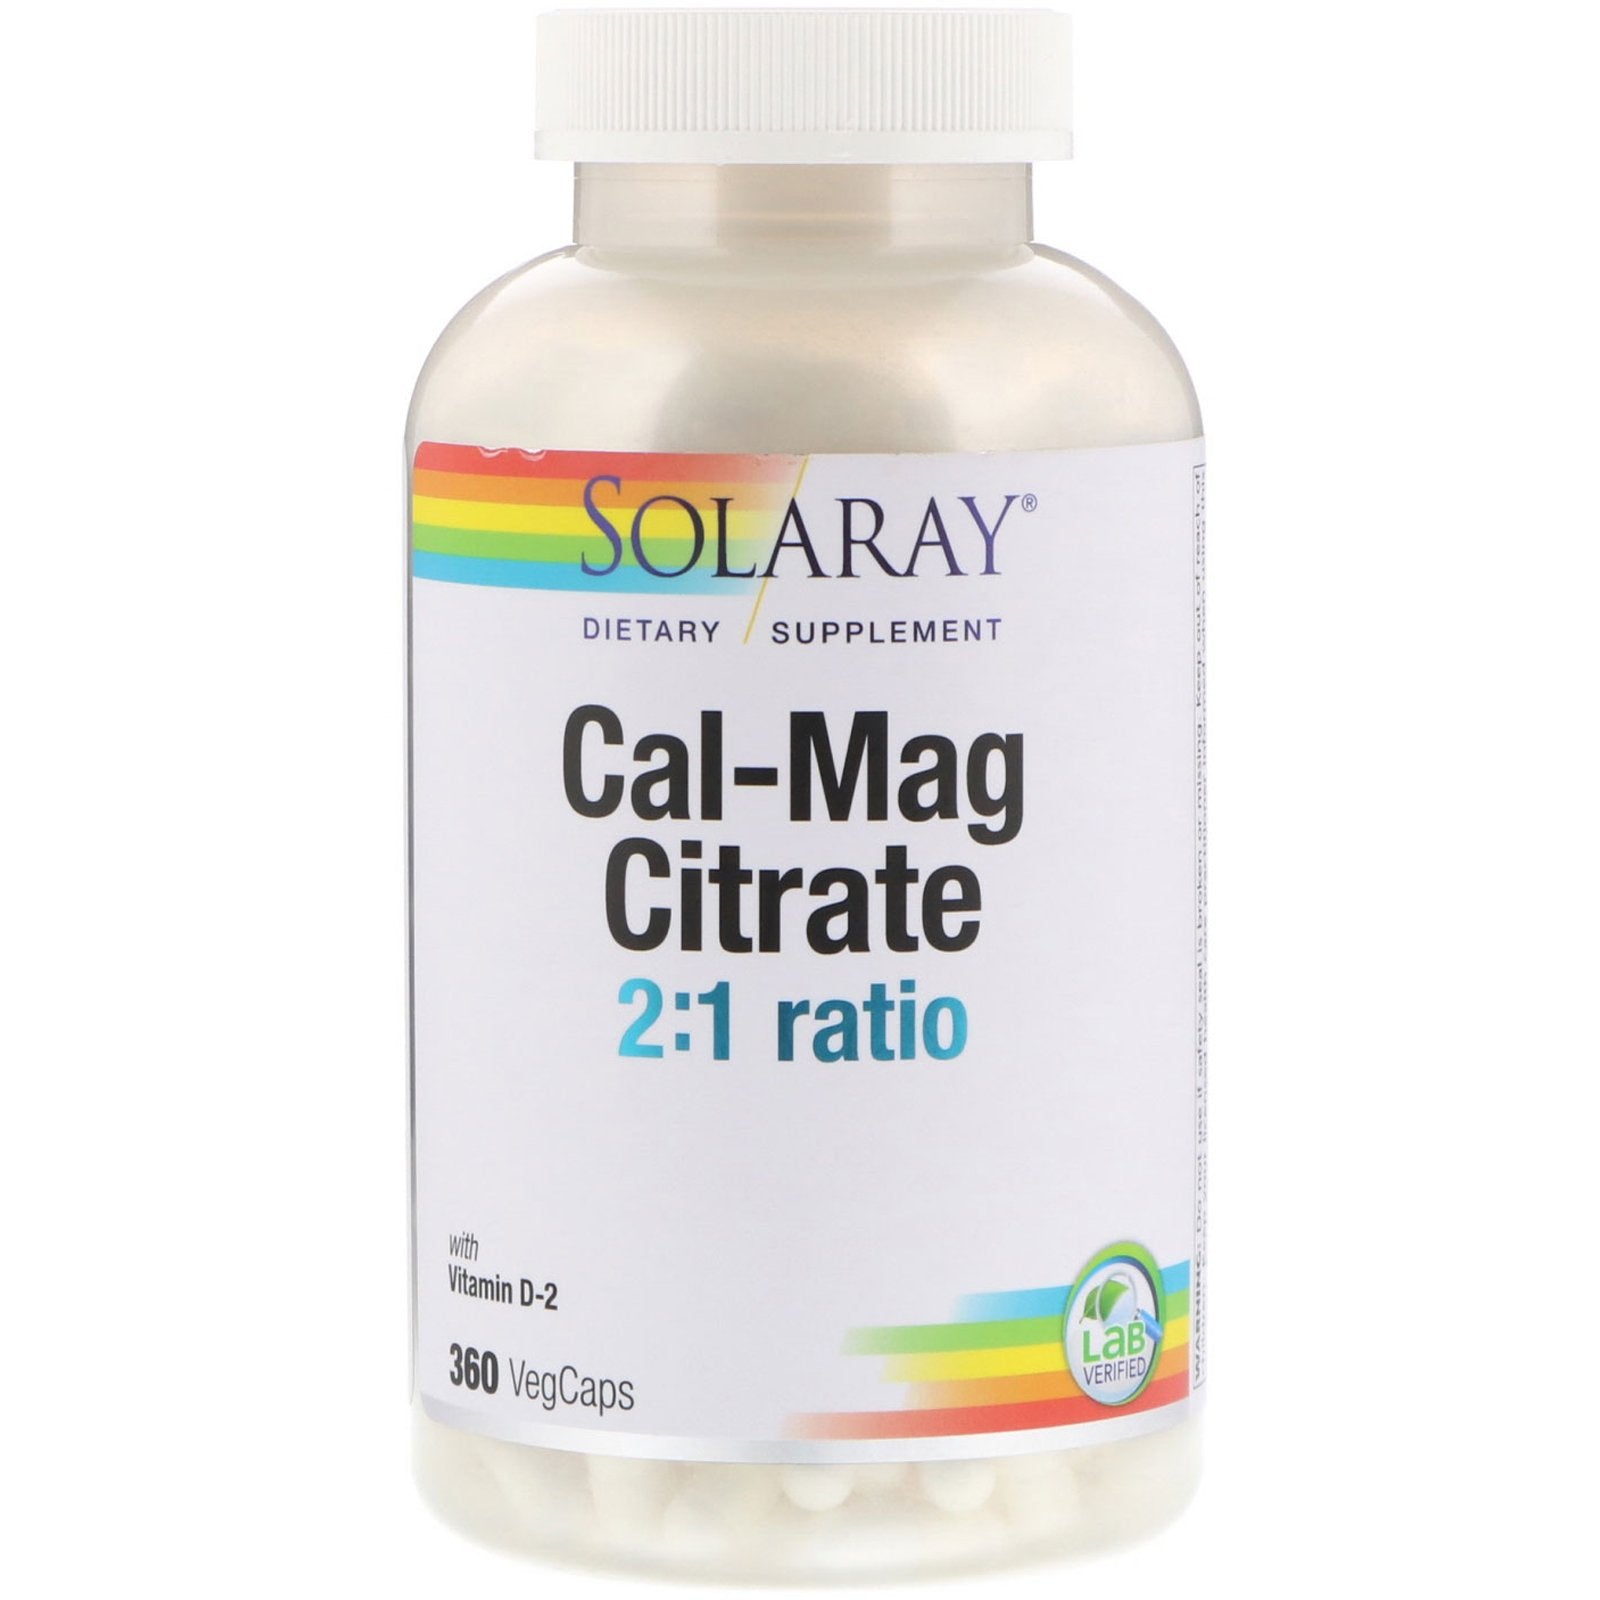 Solaray, Cal-Mag Citrate 2:1 ratio